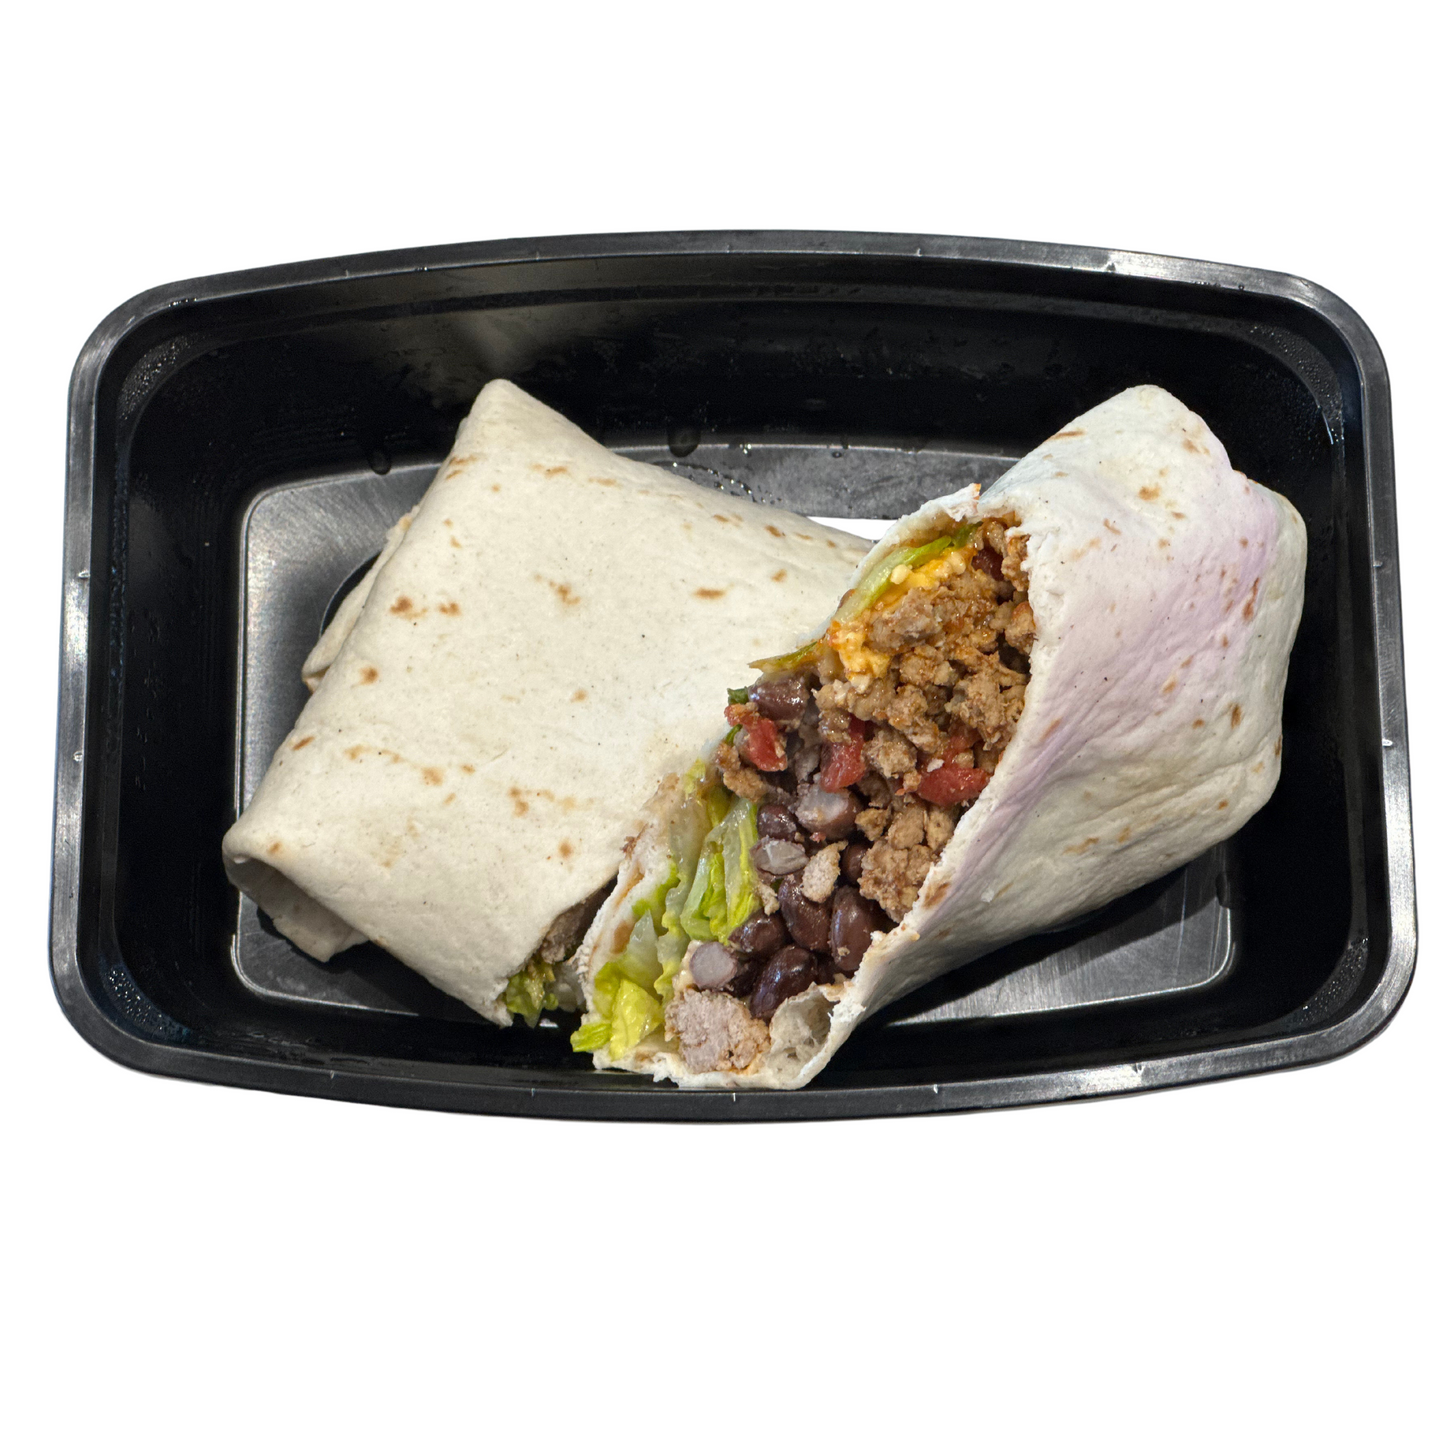 Turkey Burrito